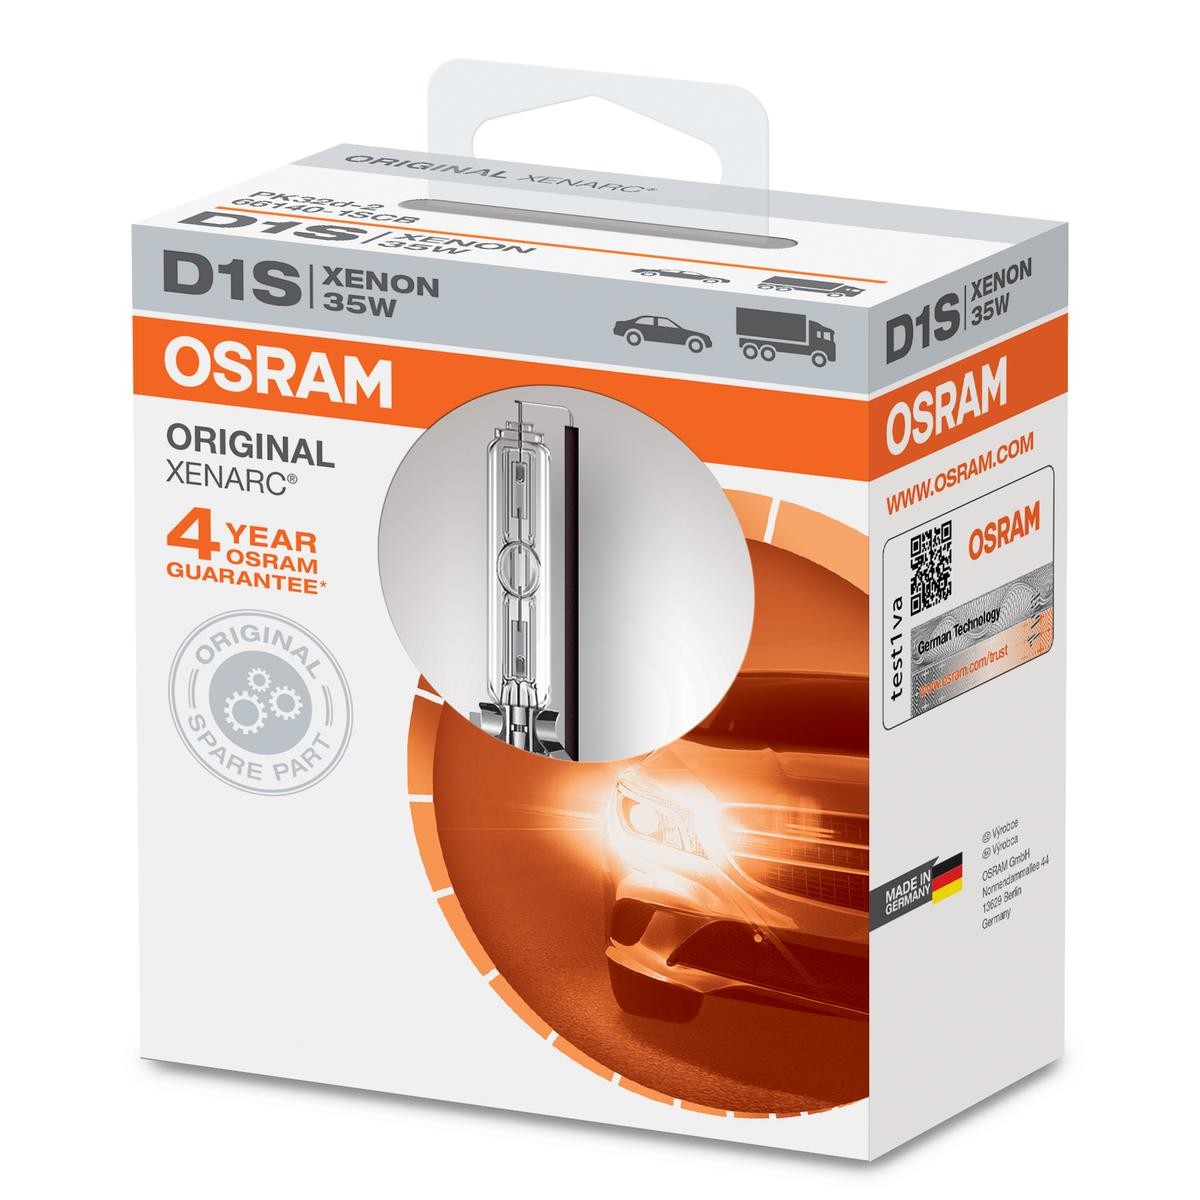 OSRAM 66140 VW Fernscheinwerfer-Glühlampe D1S 85V 35W4300K Xenon